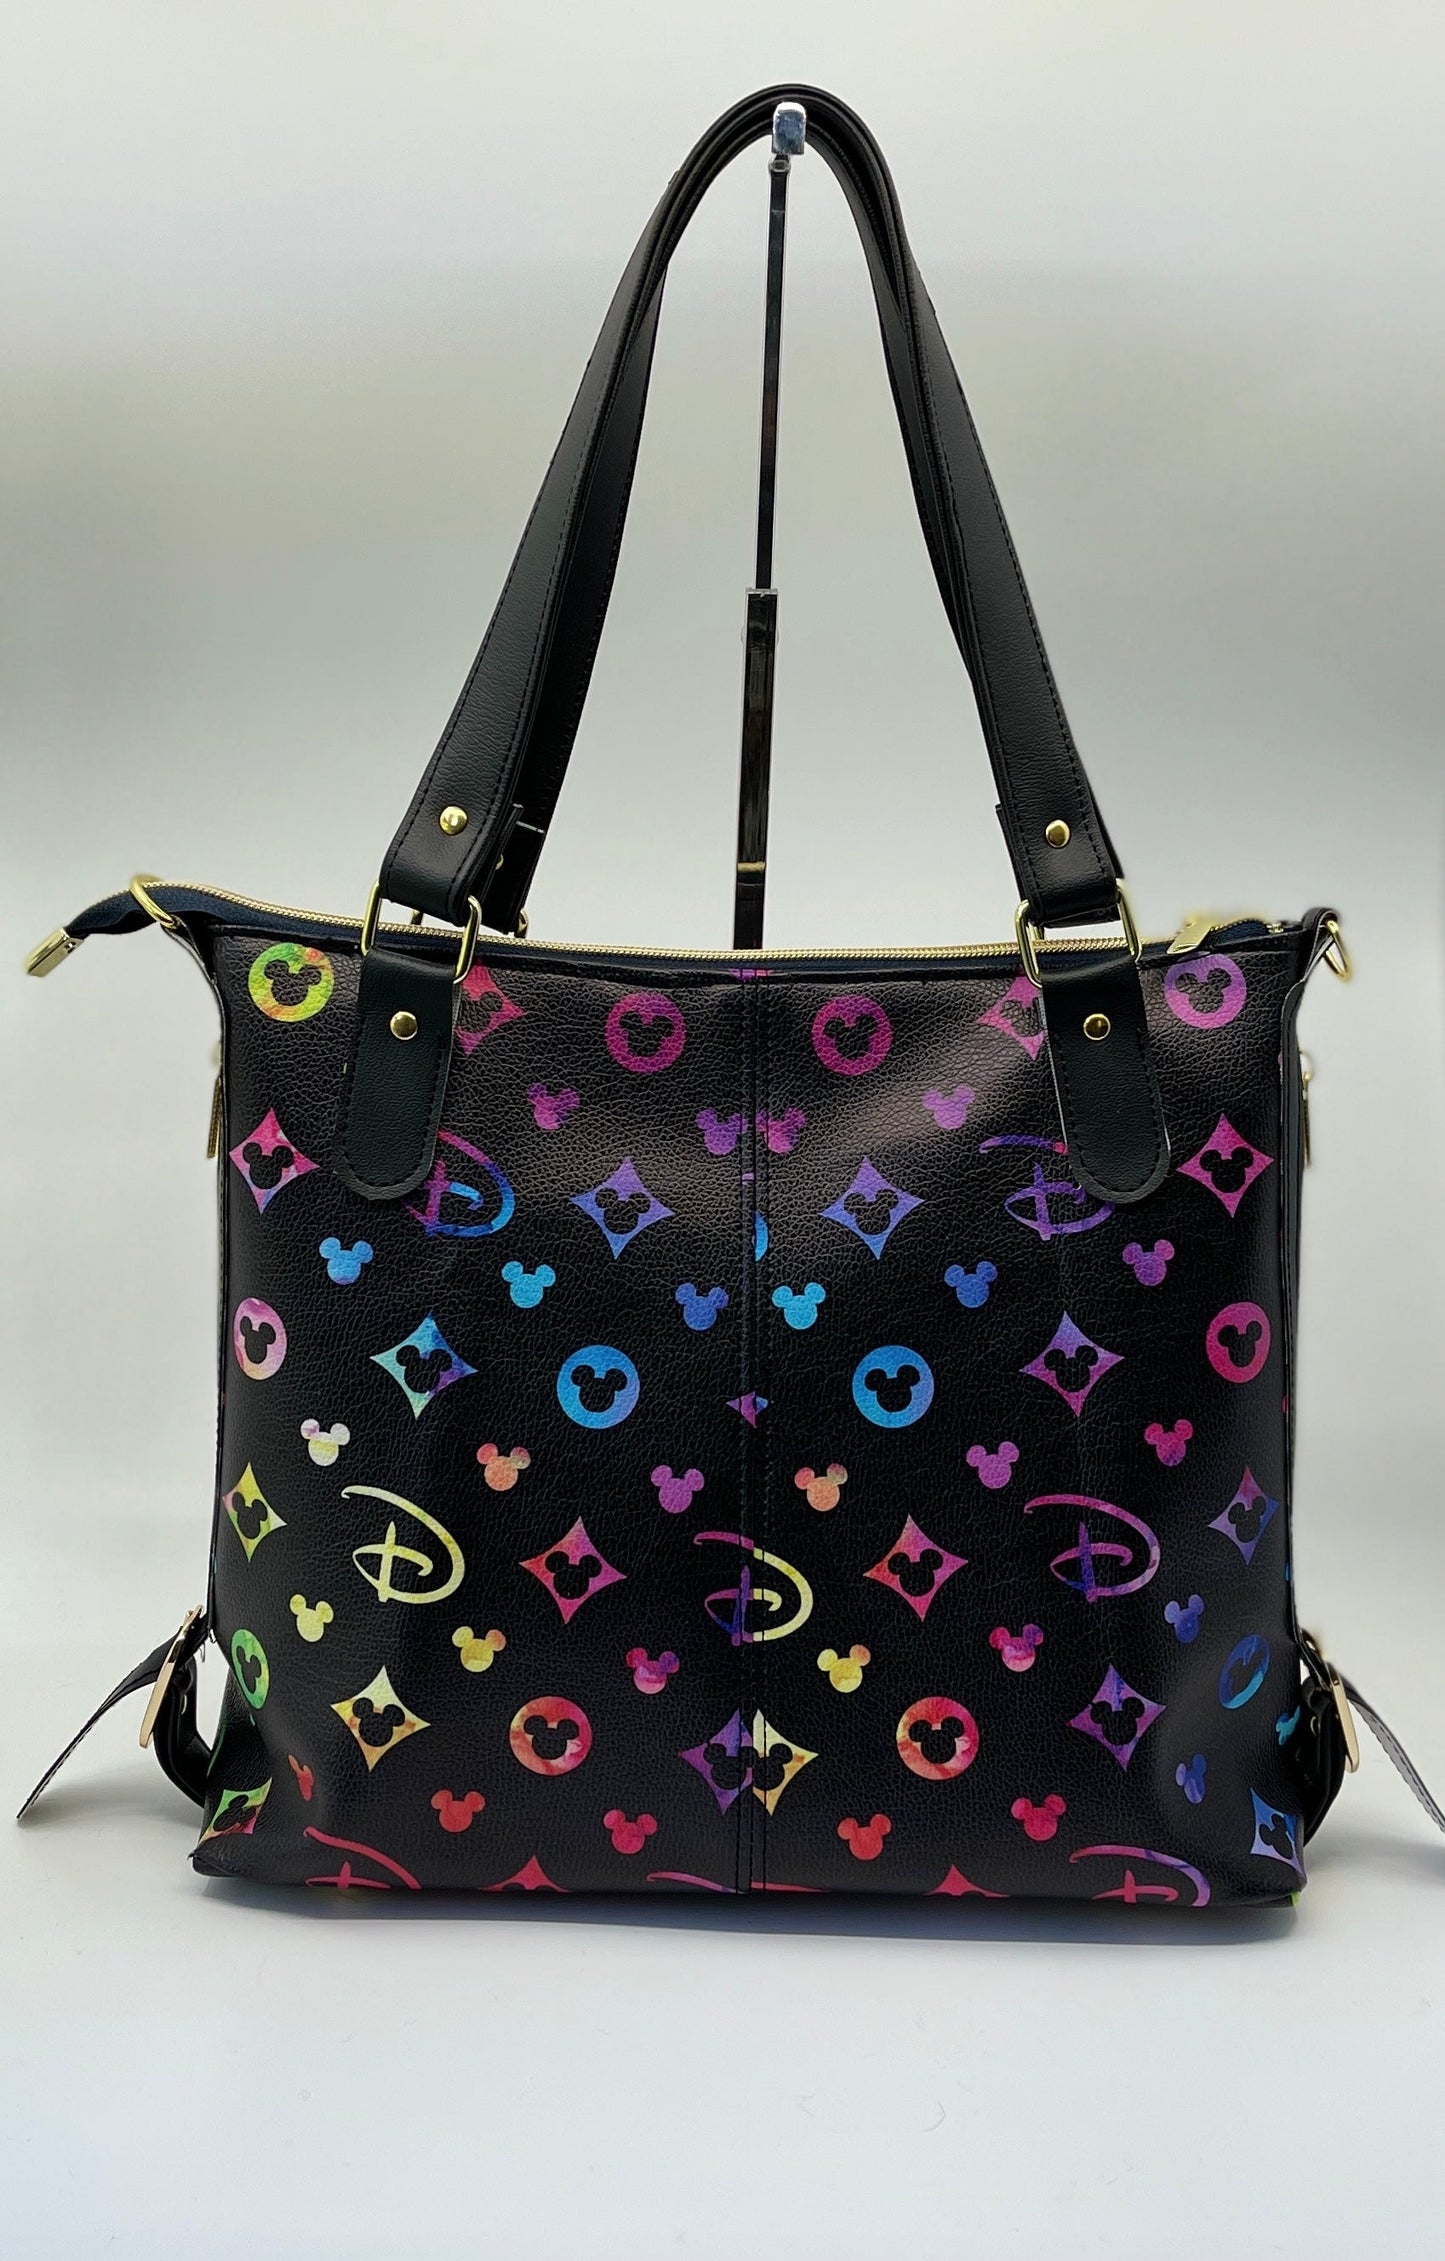 D is for Disney Handbag